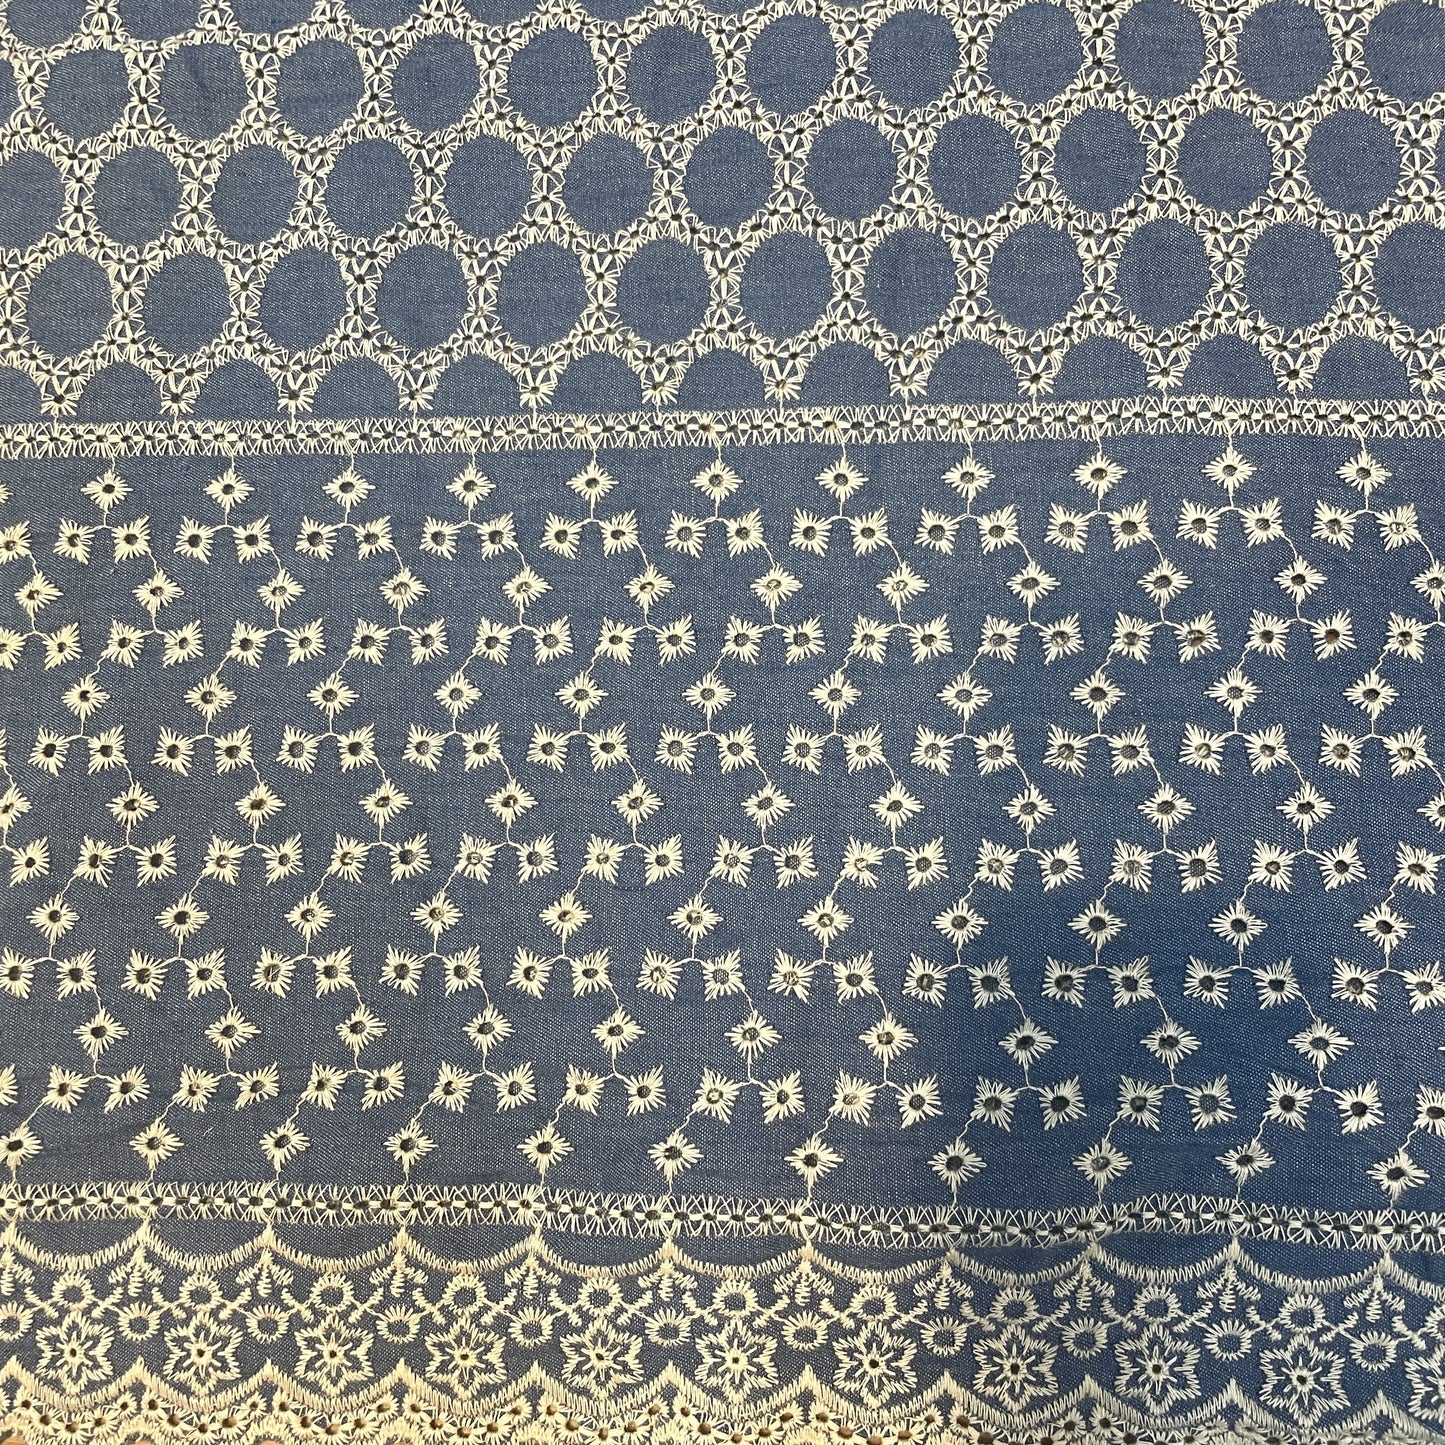 Premium Dark Blue Abstract Hakoba Floral Border Embroidery Cotton Denim Fabric